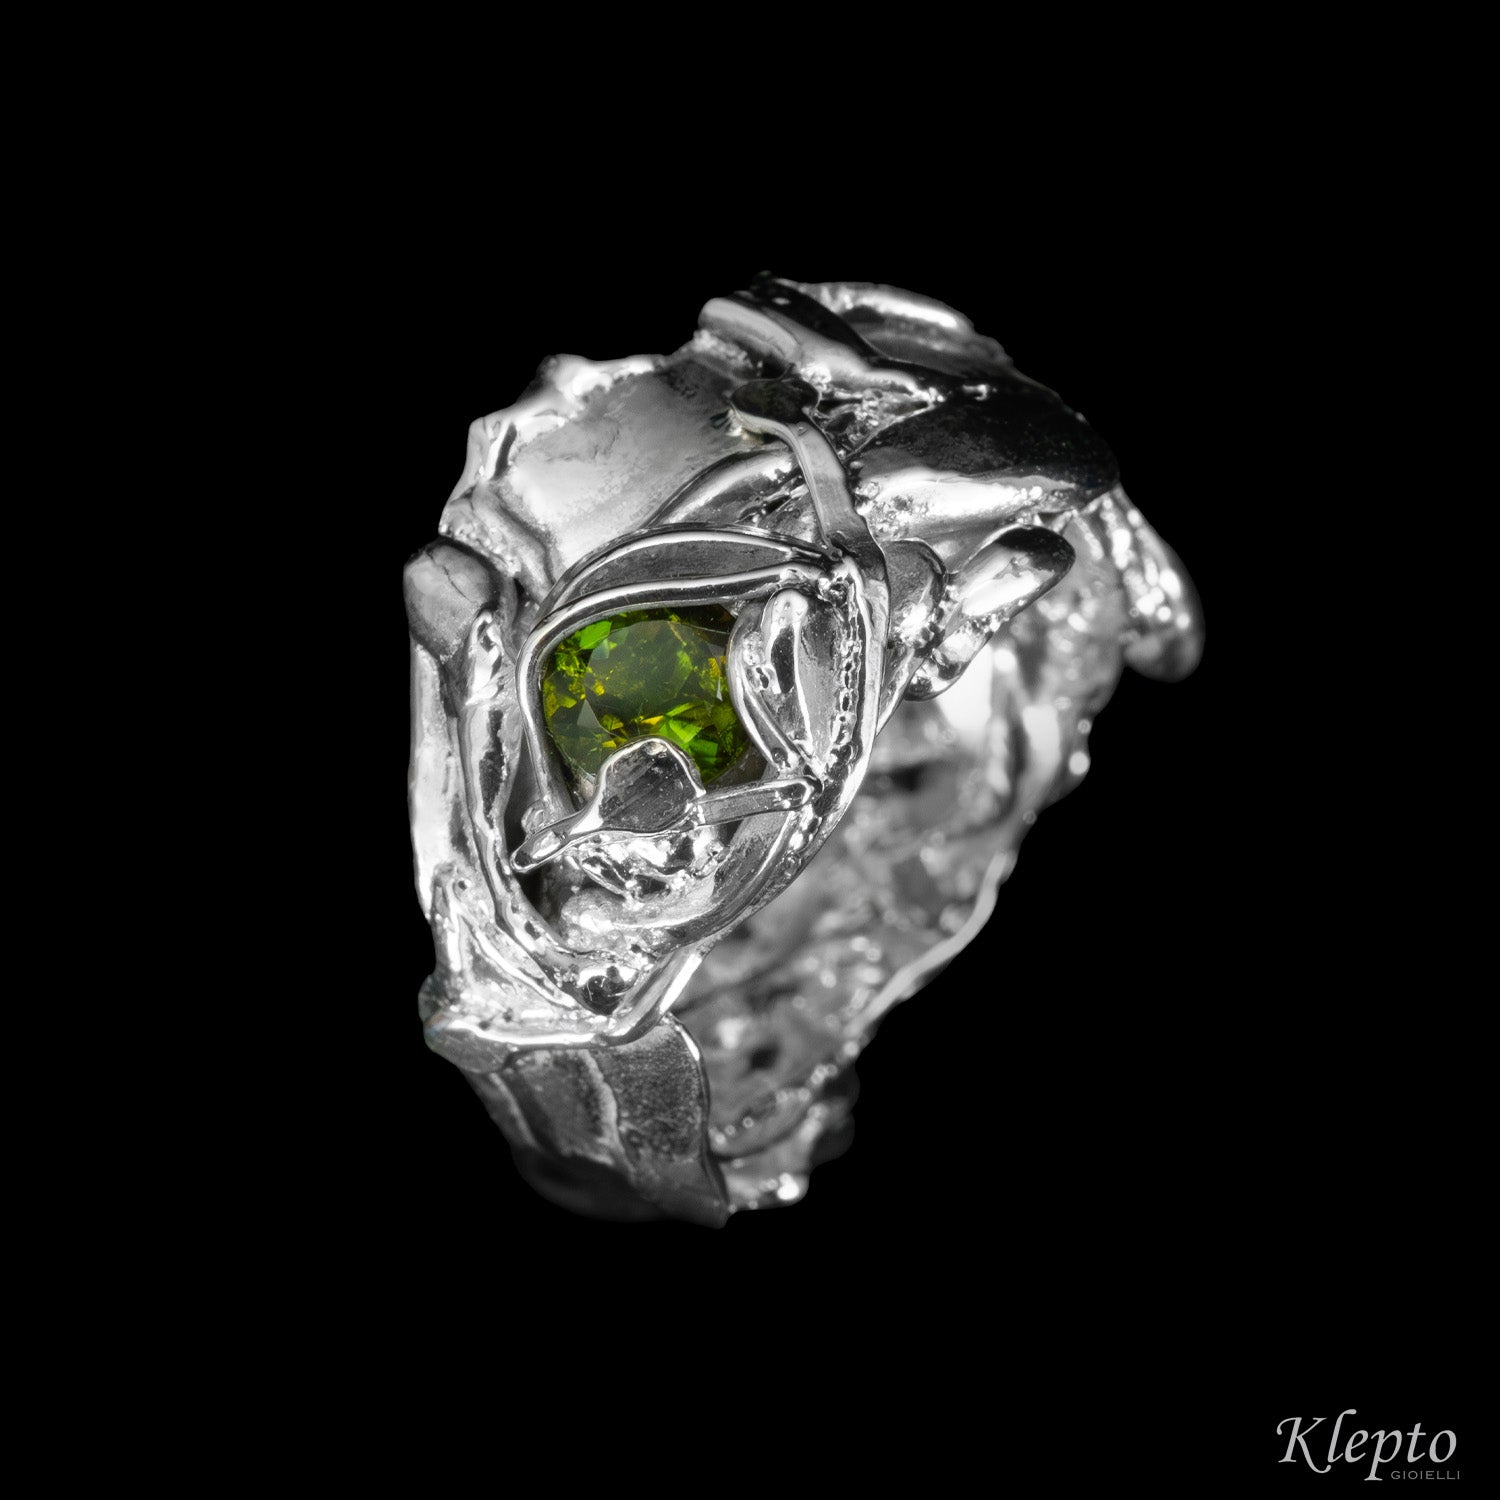 Silnova® Silver Ring with Green Tourmaline